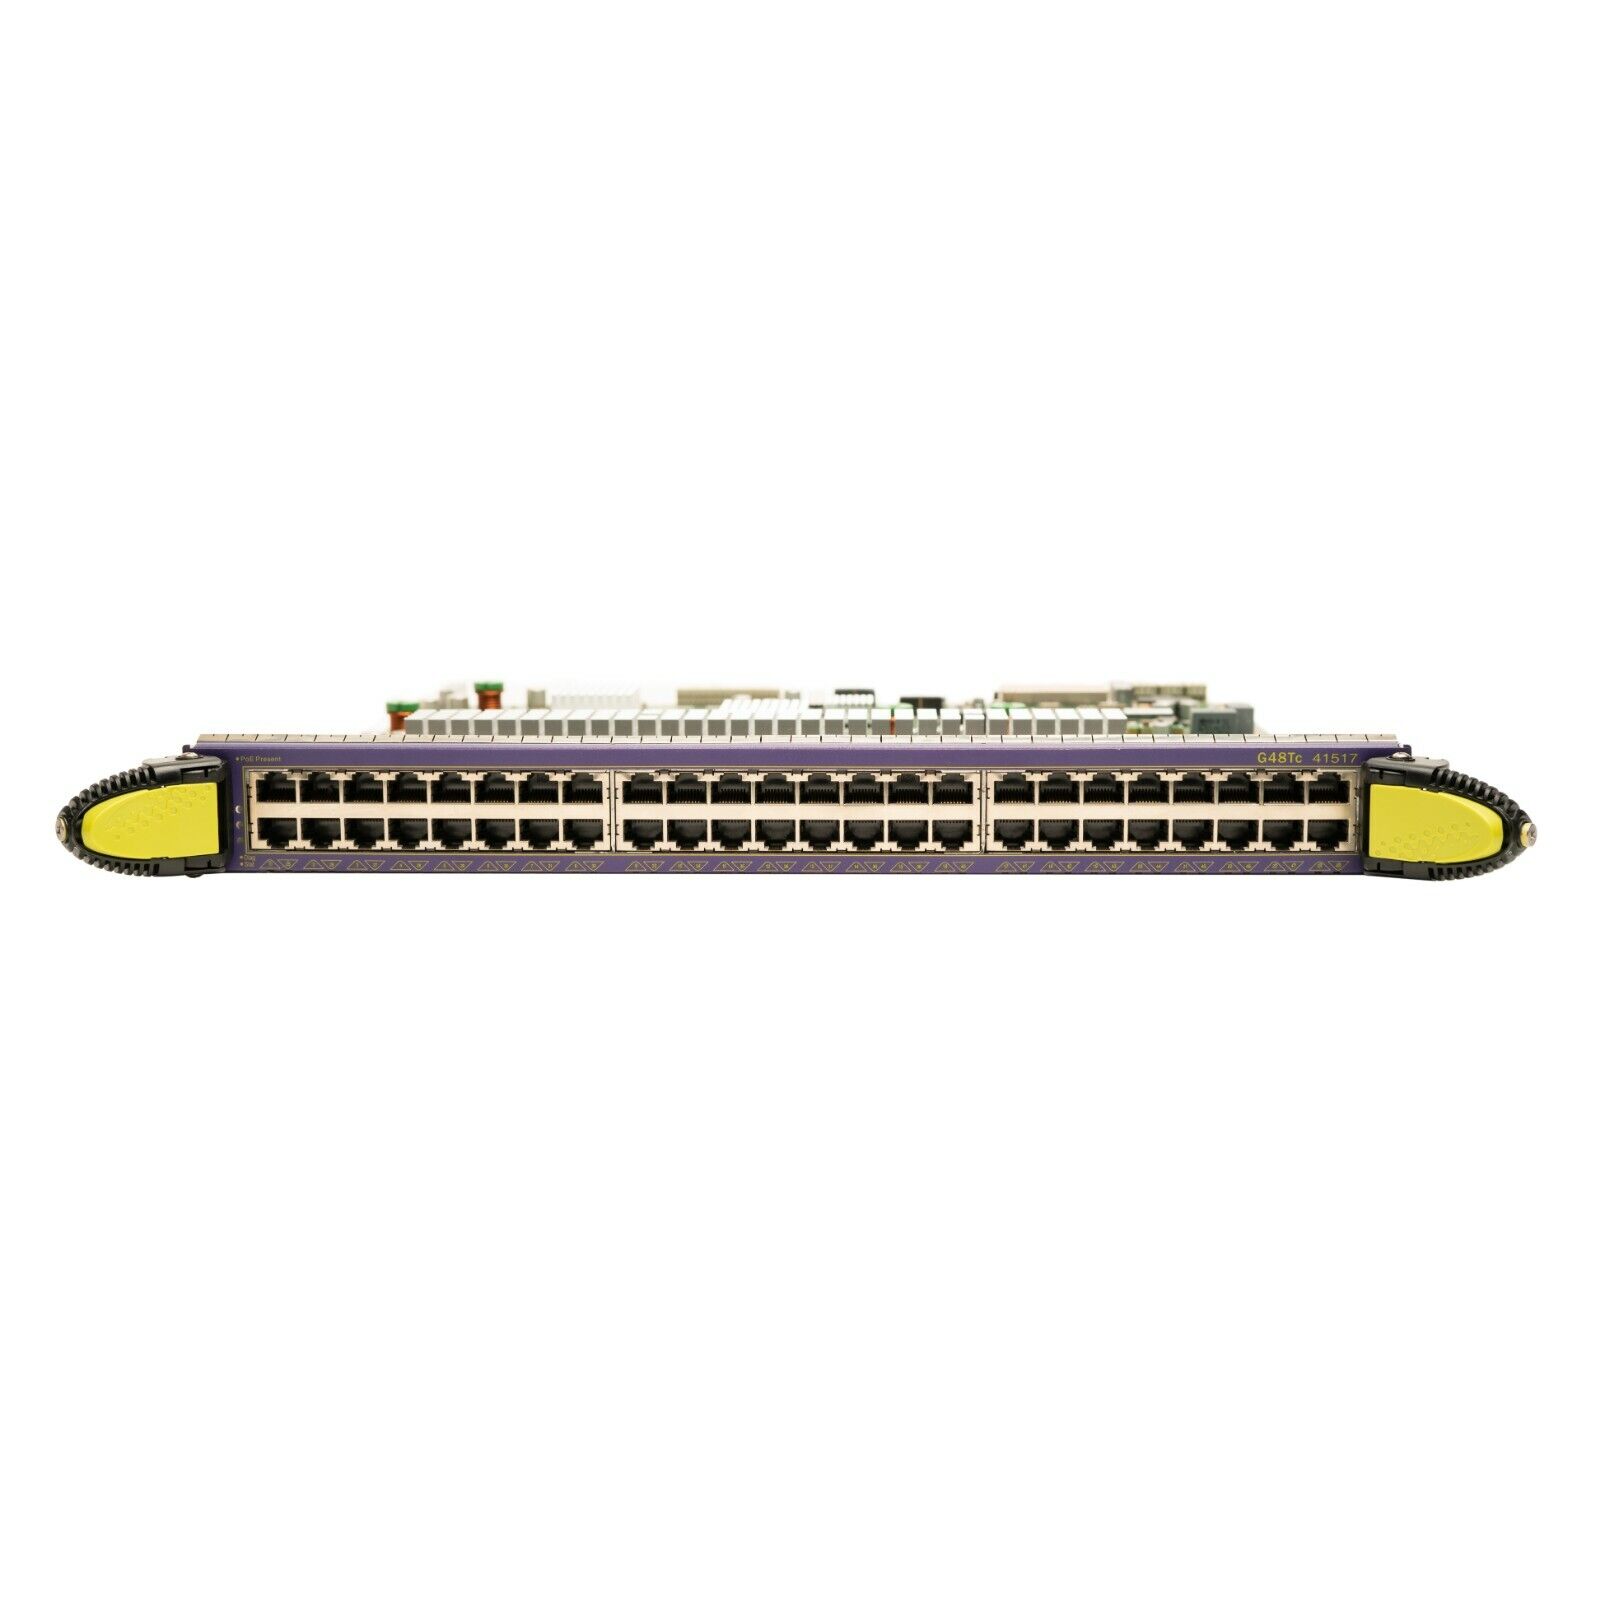 Extreme Networks G48Tc 41517 Black Diamond 8800 48-Port BASE-T Module